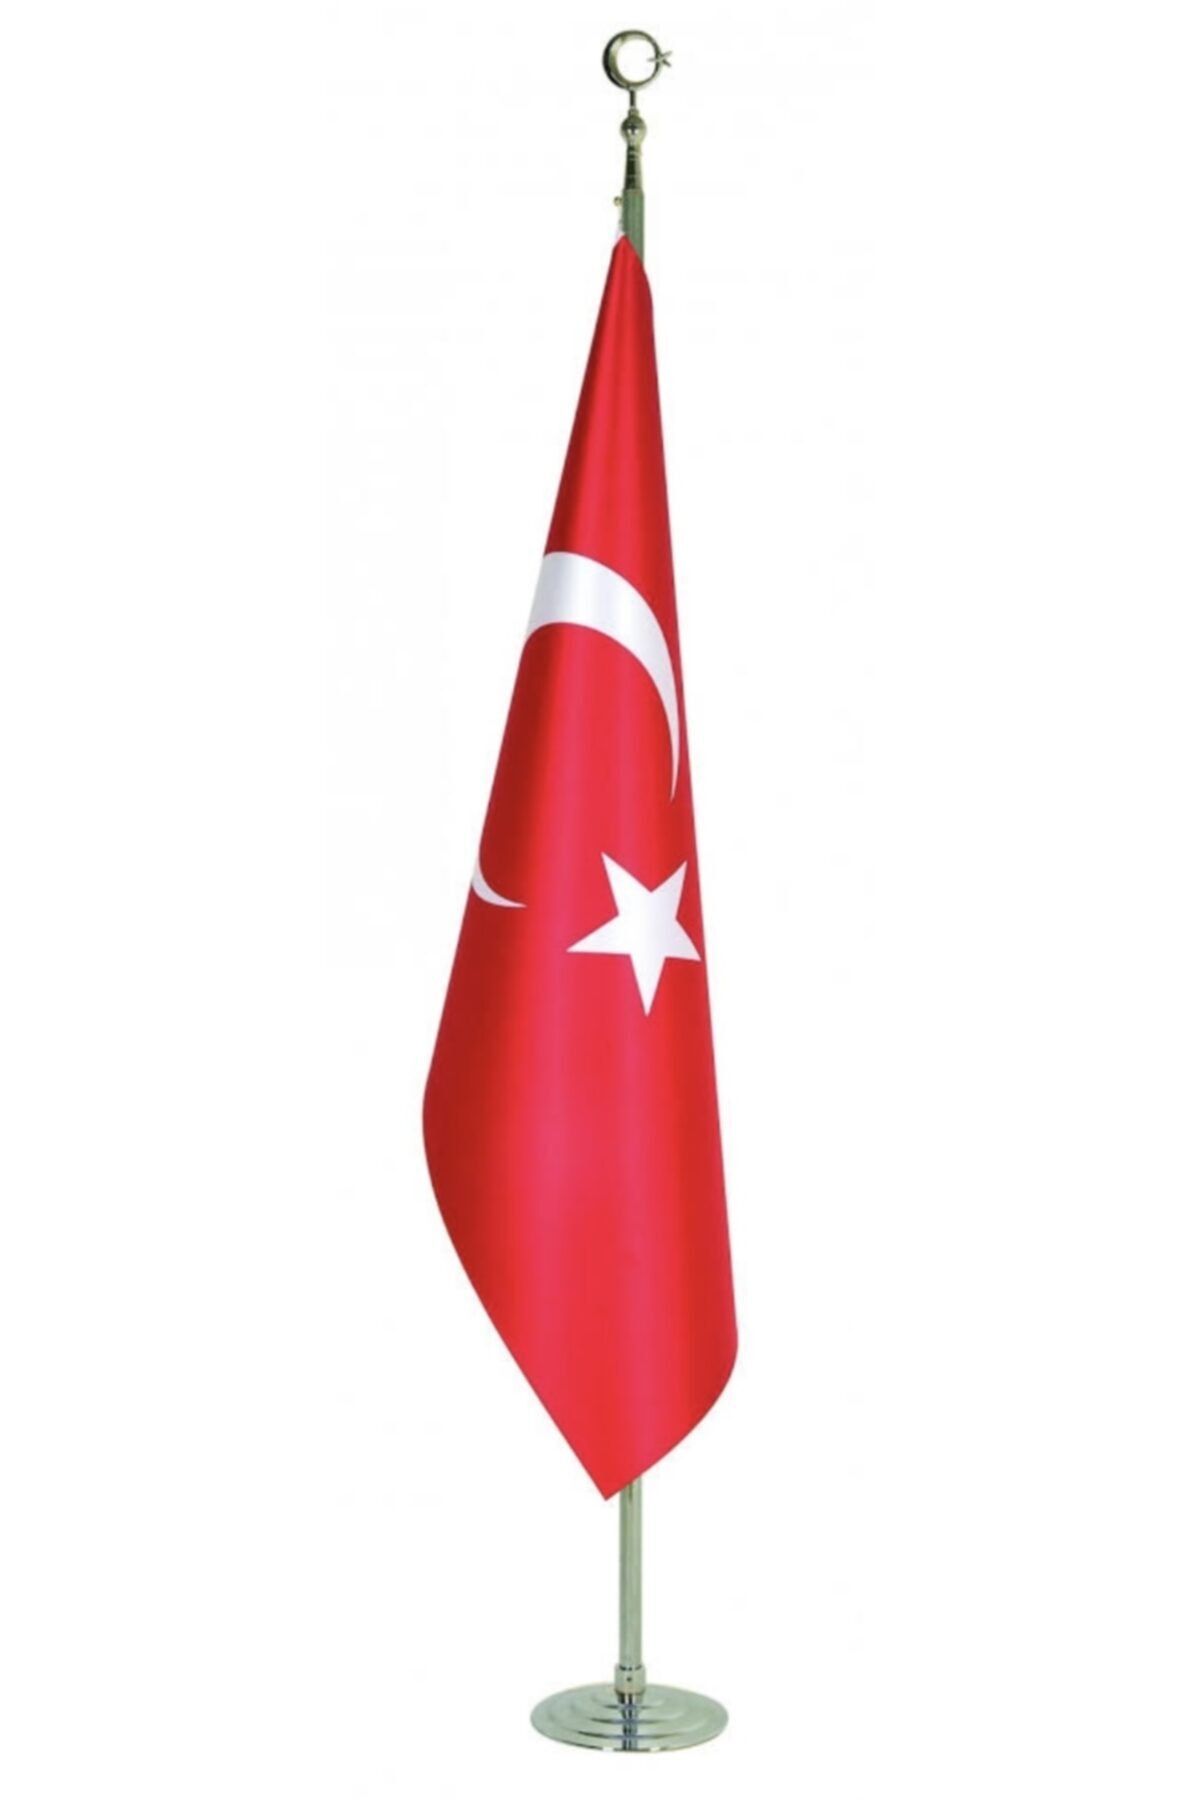 BayrakDünyası Ofis Makam Bayrağı + Telalı Türk Bayrağı